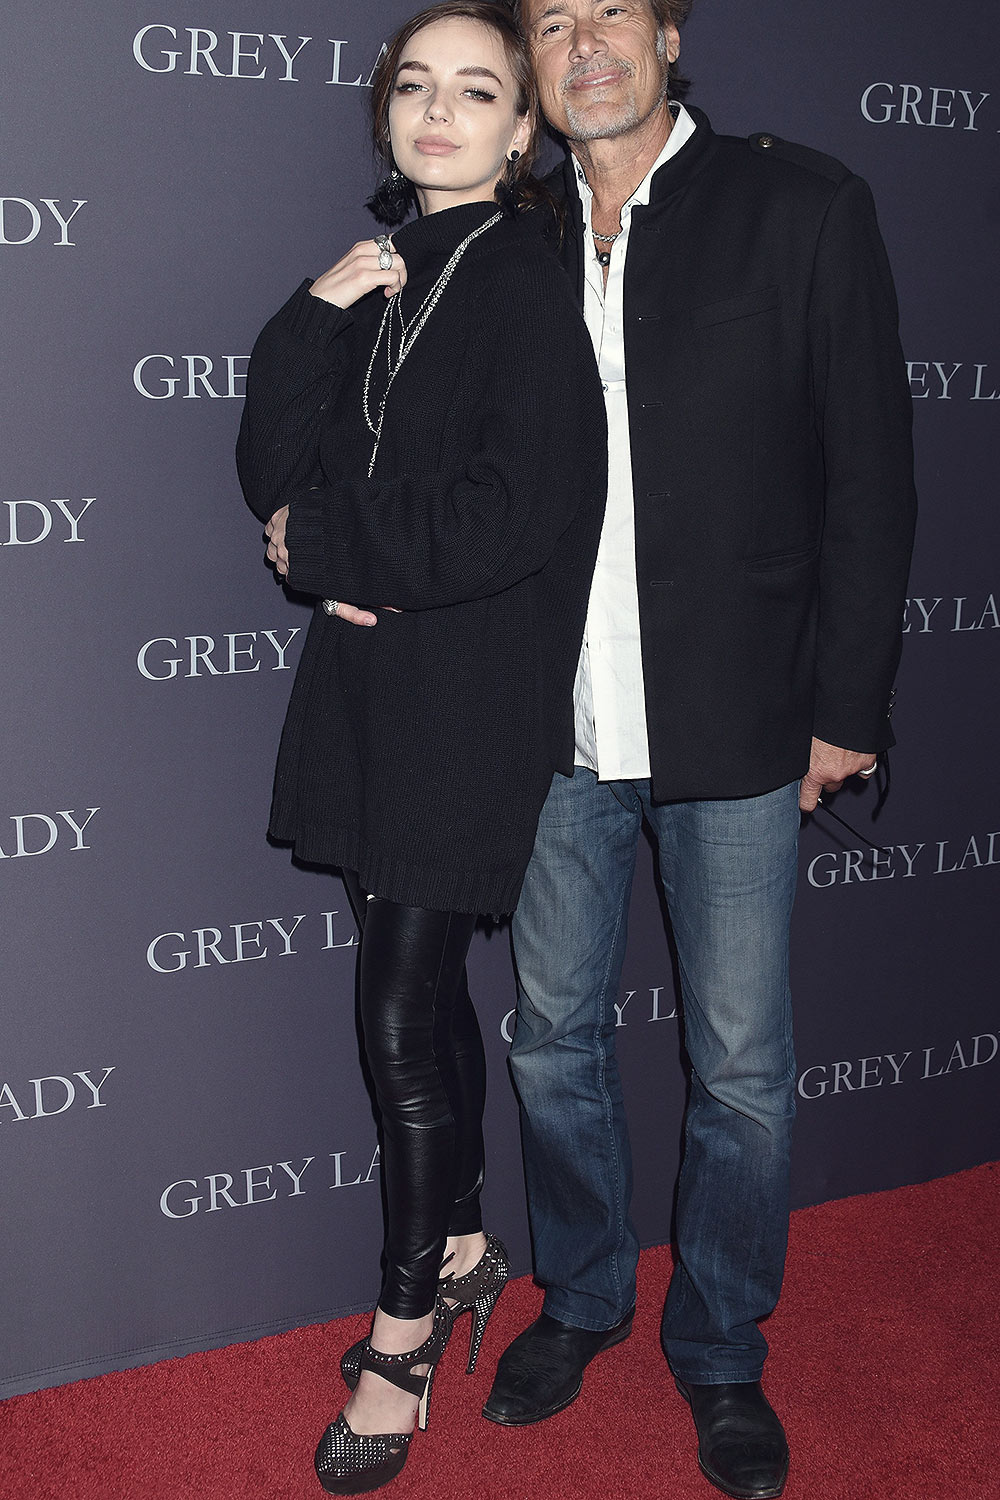 Lyda Loudon attends ‘Grey Lady’ film premiere